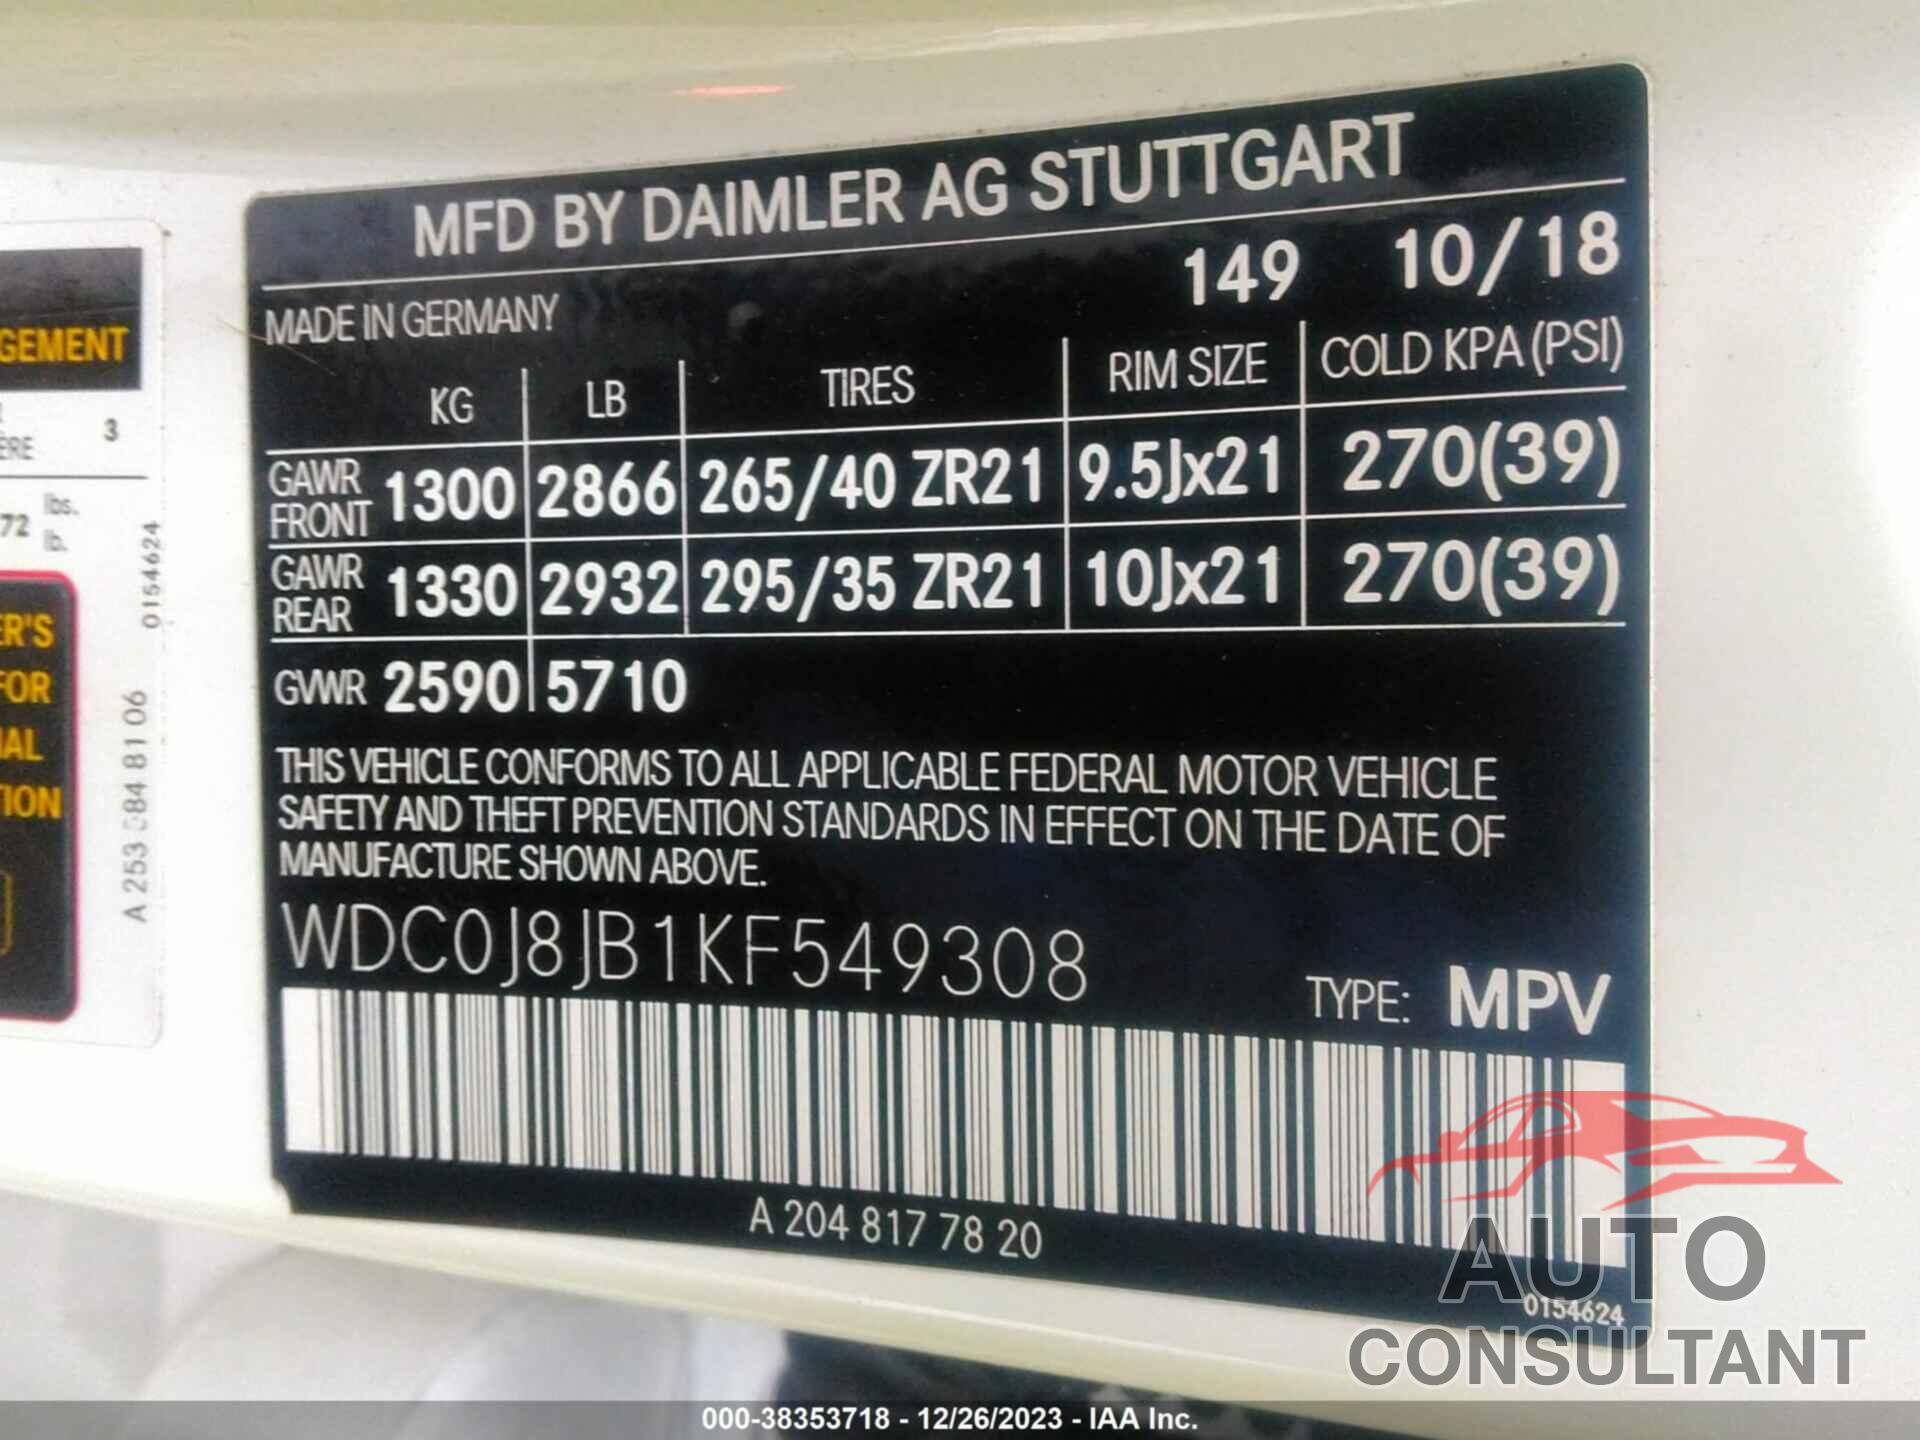 MERCEDES-BENZ AMG GLC 63 COUPE 2019 - WDC0J8JB1KF549308